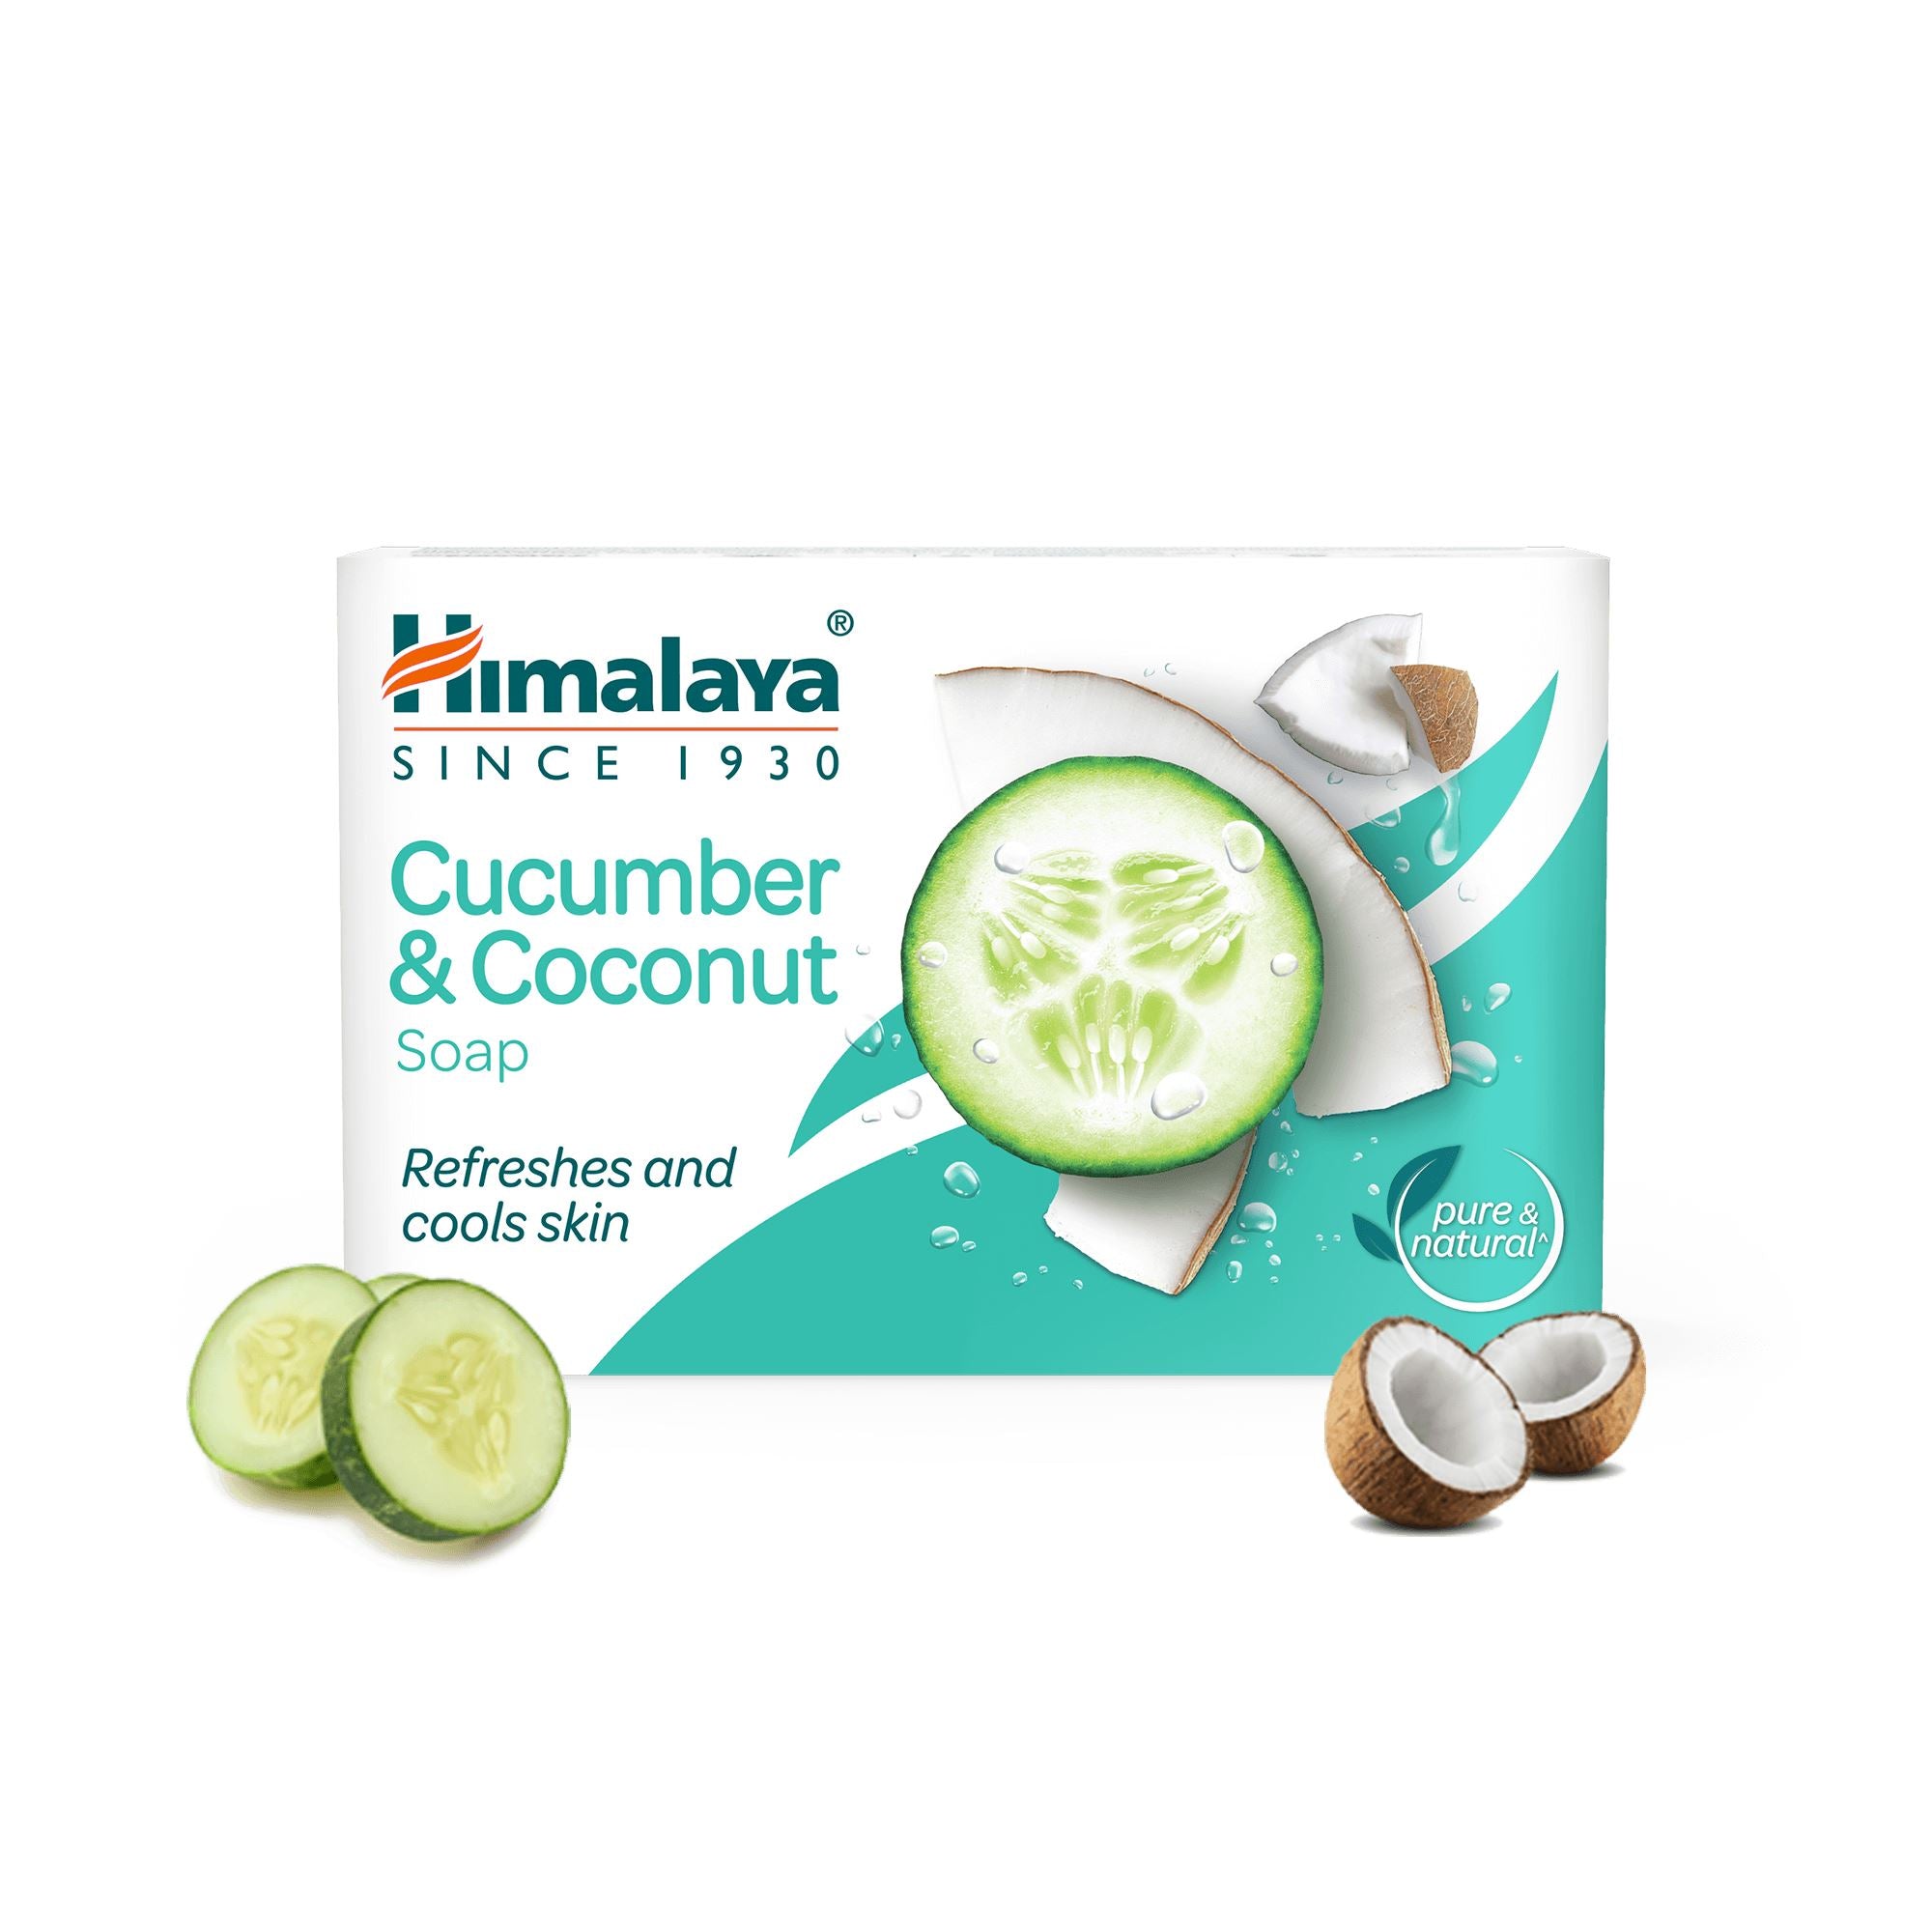 Cucumber & Coconut Soap